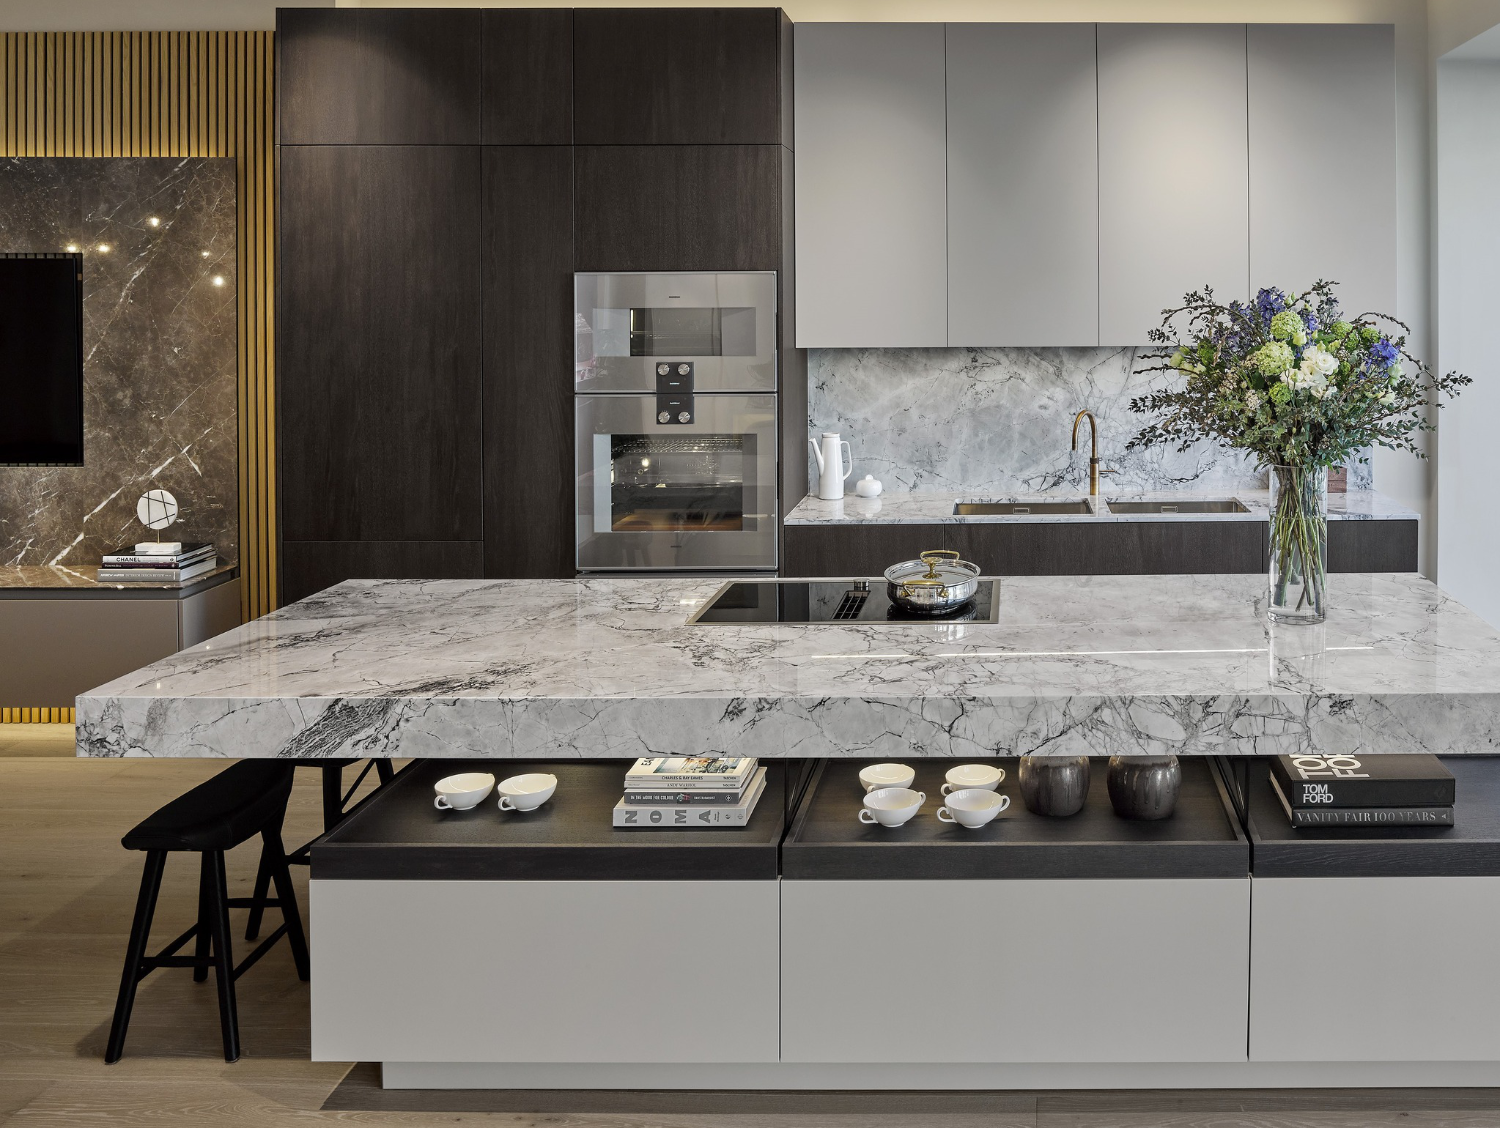 A stunning kitchen countertop with marble elegance, quartz durability and granite versatility